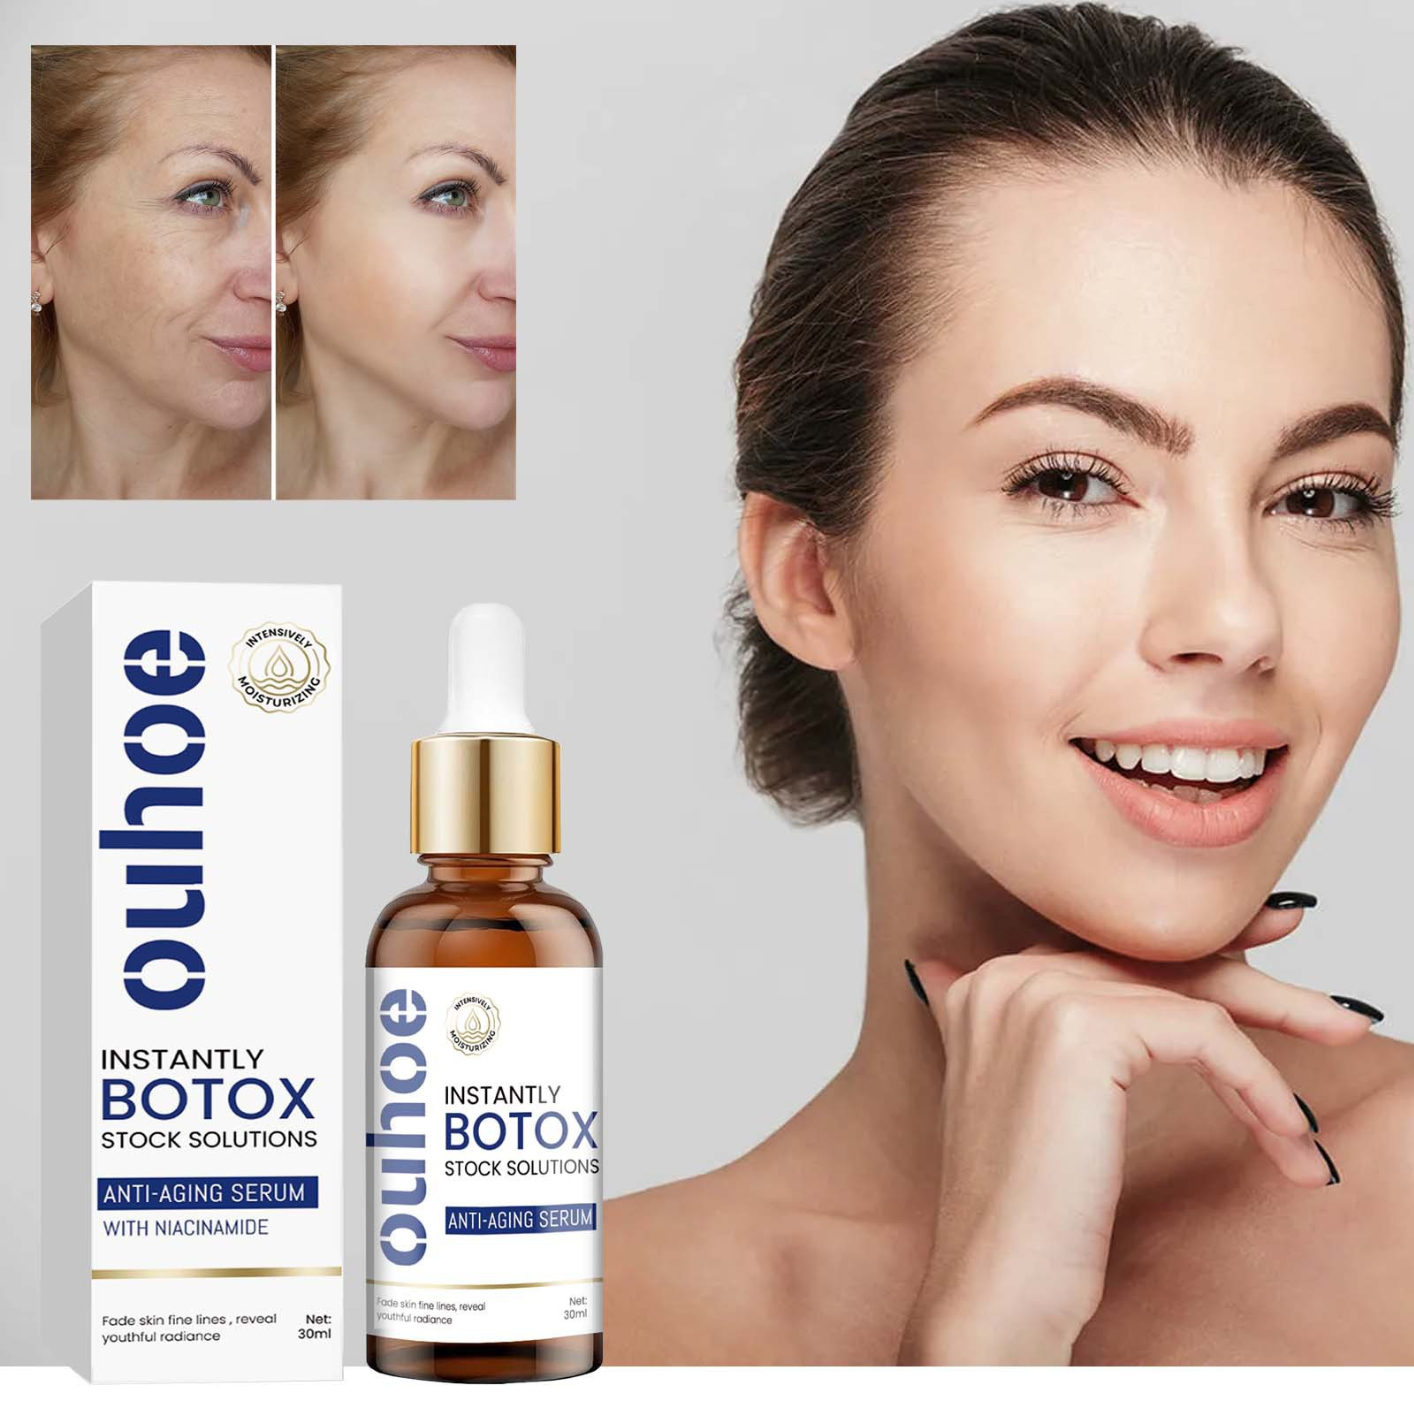 OUHOE Botox Stock Solution Facial Serum,Botox Stock Solution Anti-aging Serum,Botox Face Serum for Women, Reduce Fine Lines, Wrinkles, Plump Skin